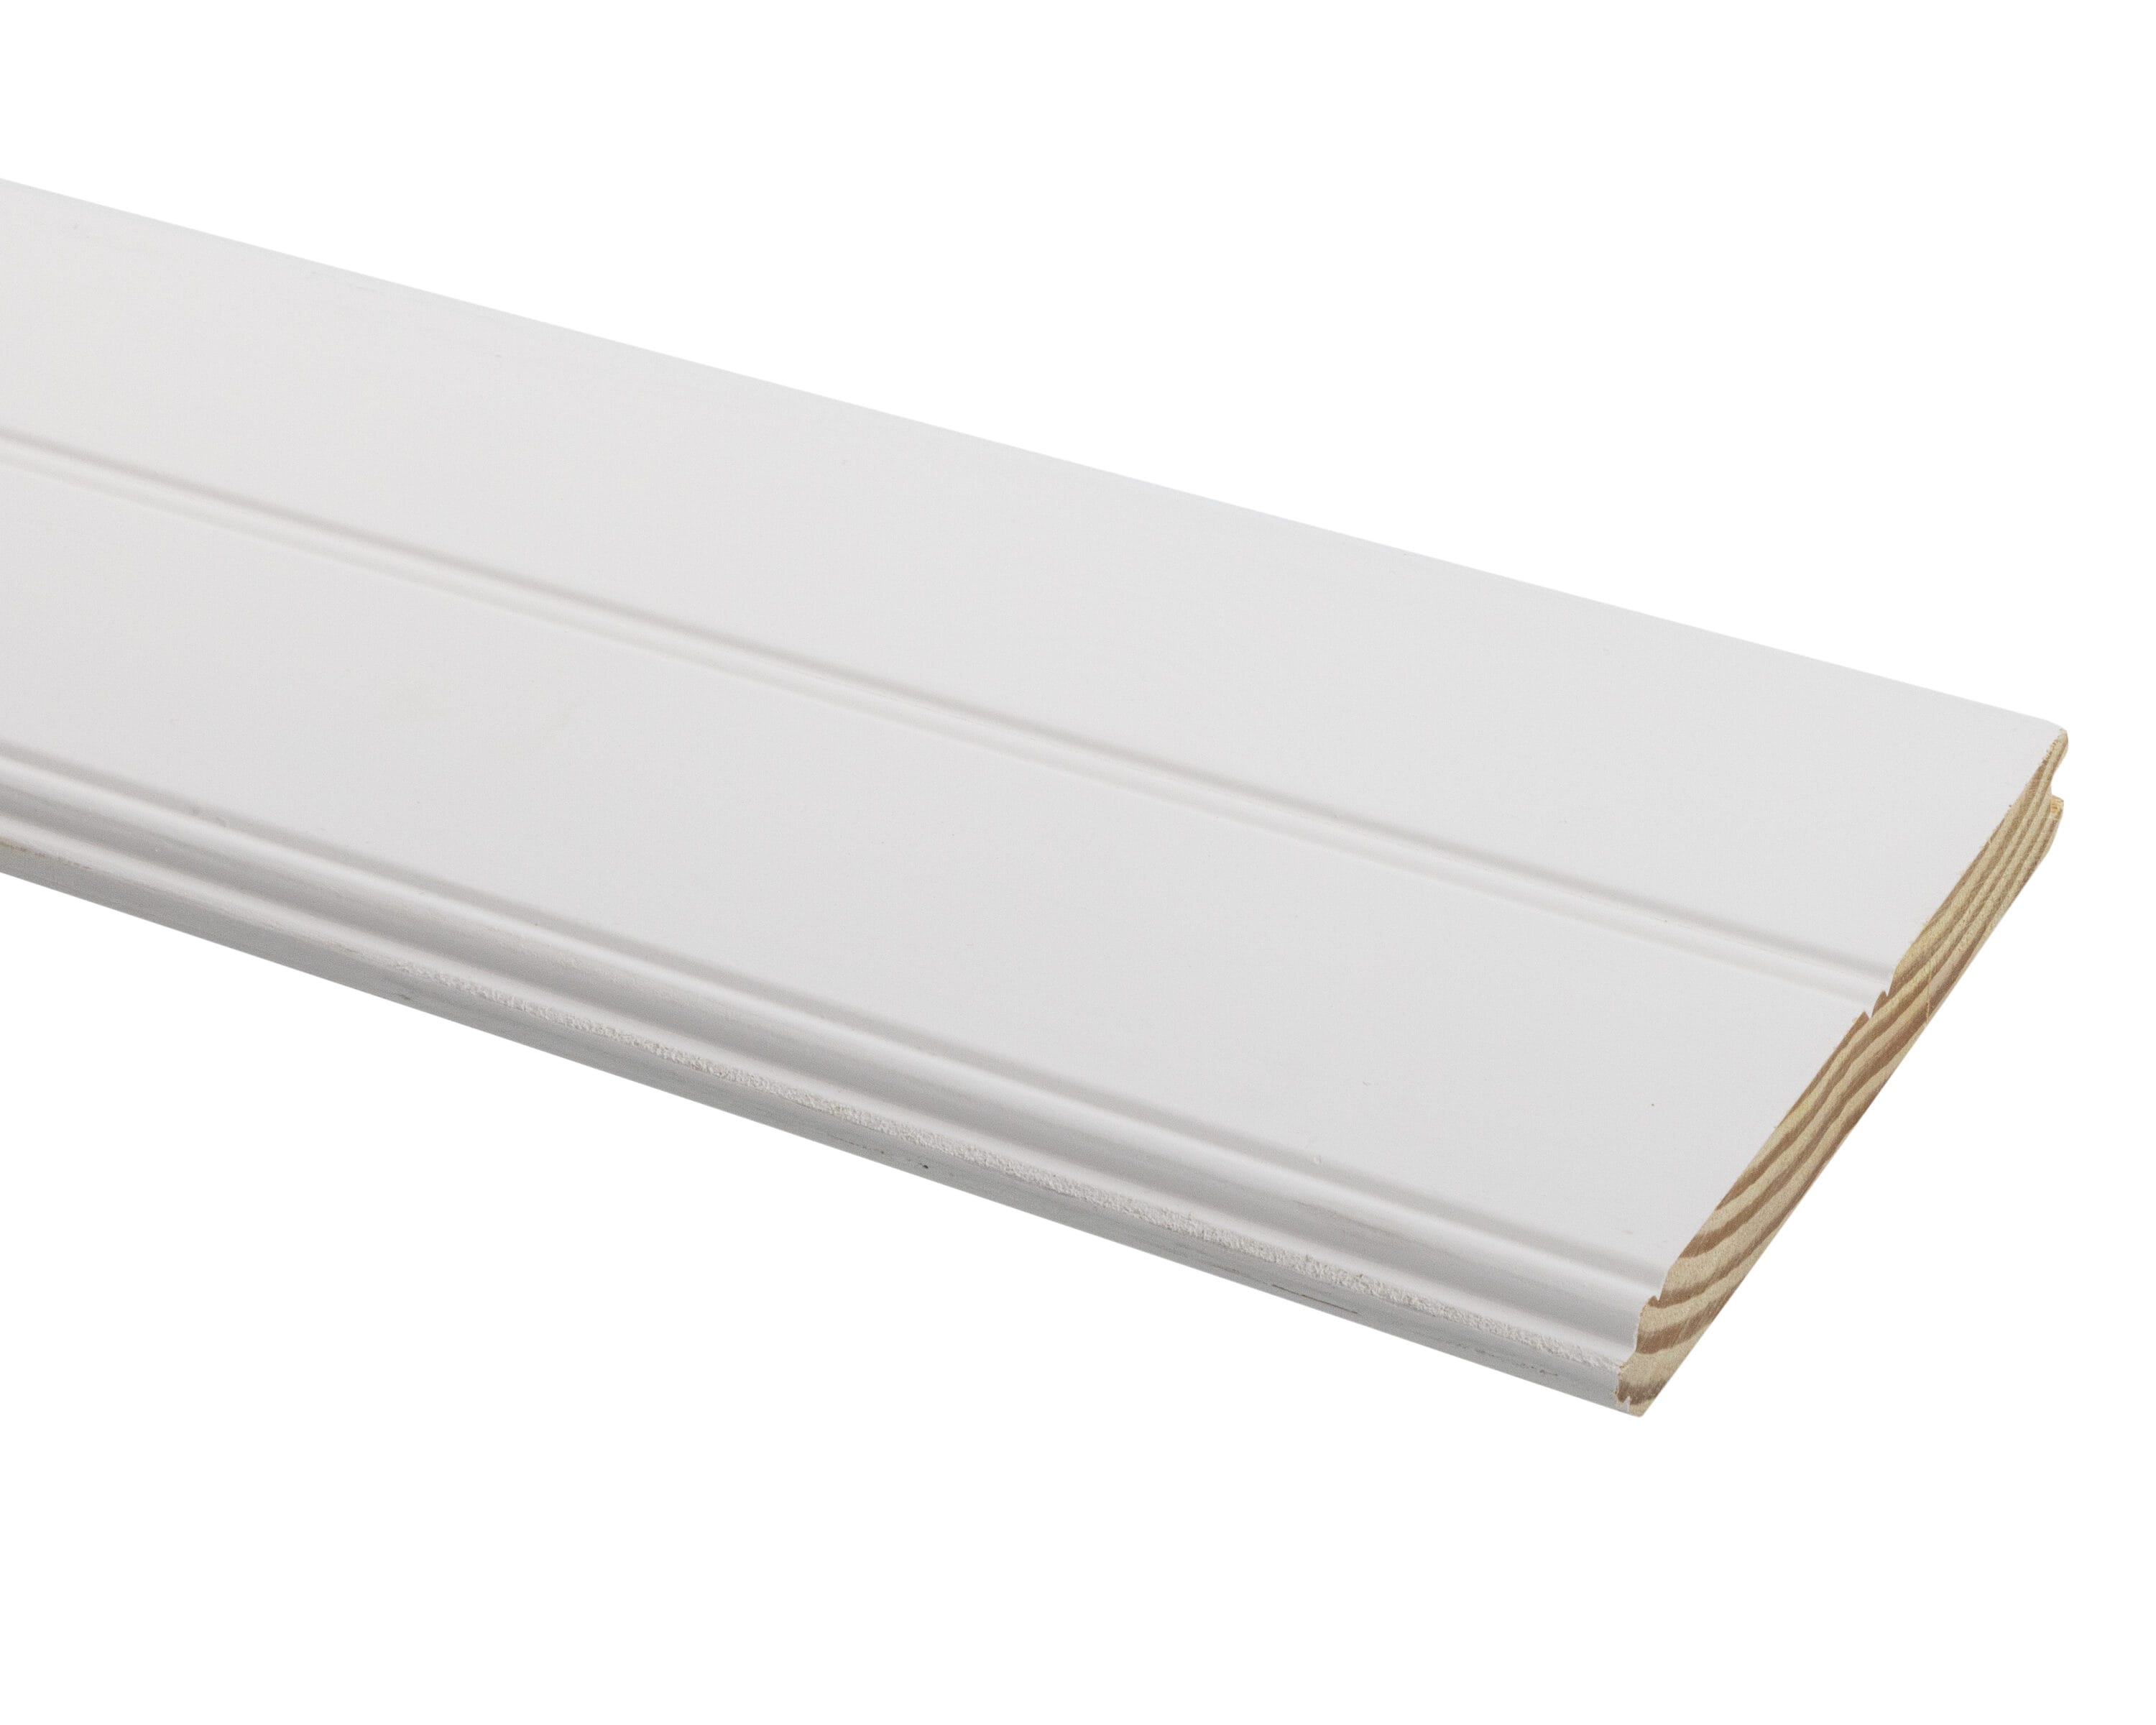 Bead board, plastic, white, 21x10-inch rectangle. Sold